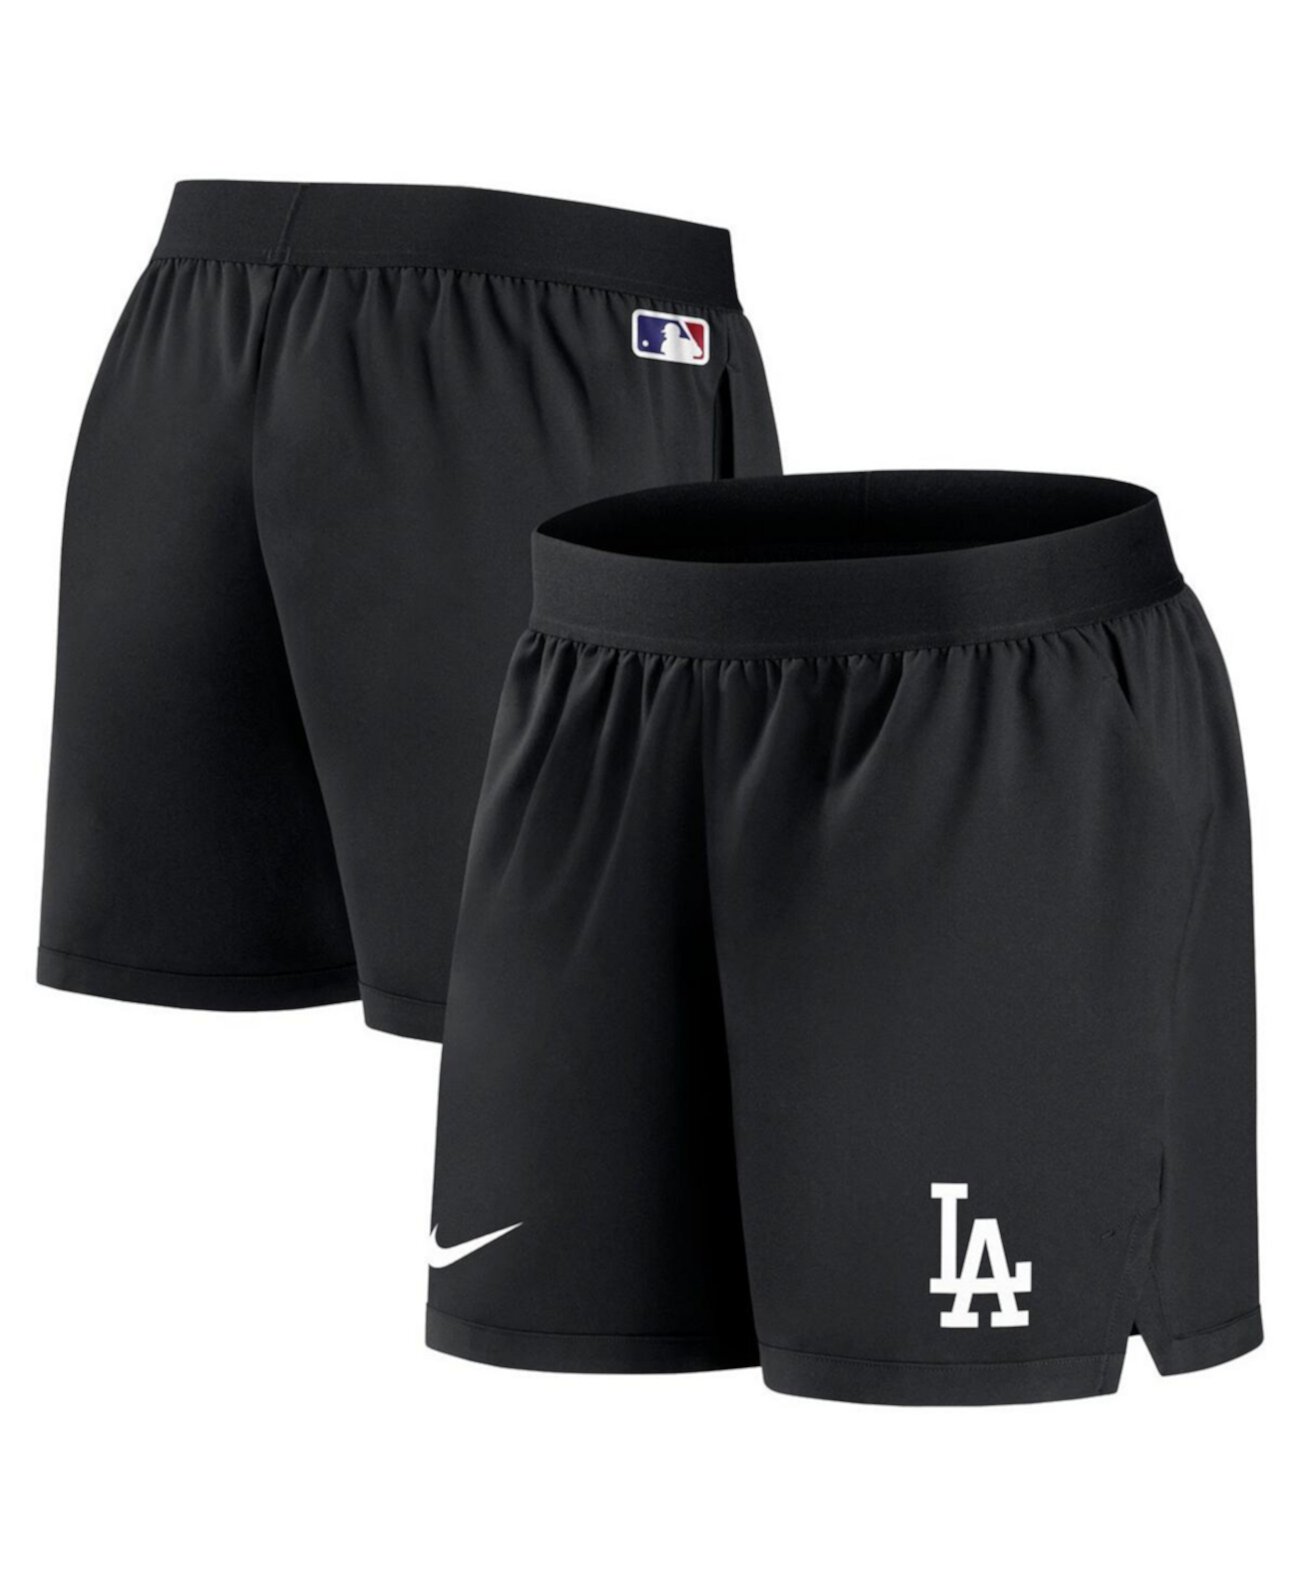 Женские черные шорты Los Angeles Dodgers Authentic Collection Team Performance Nike